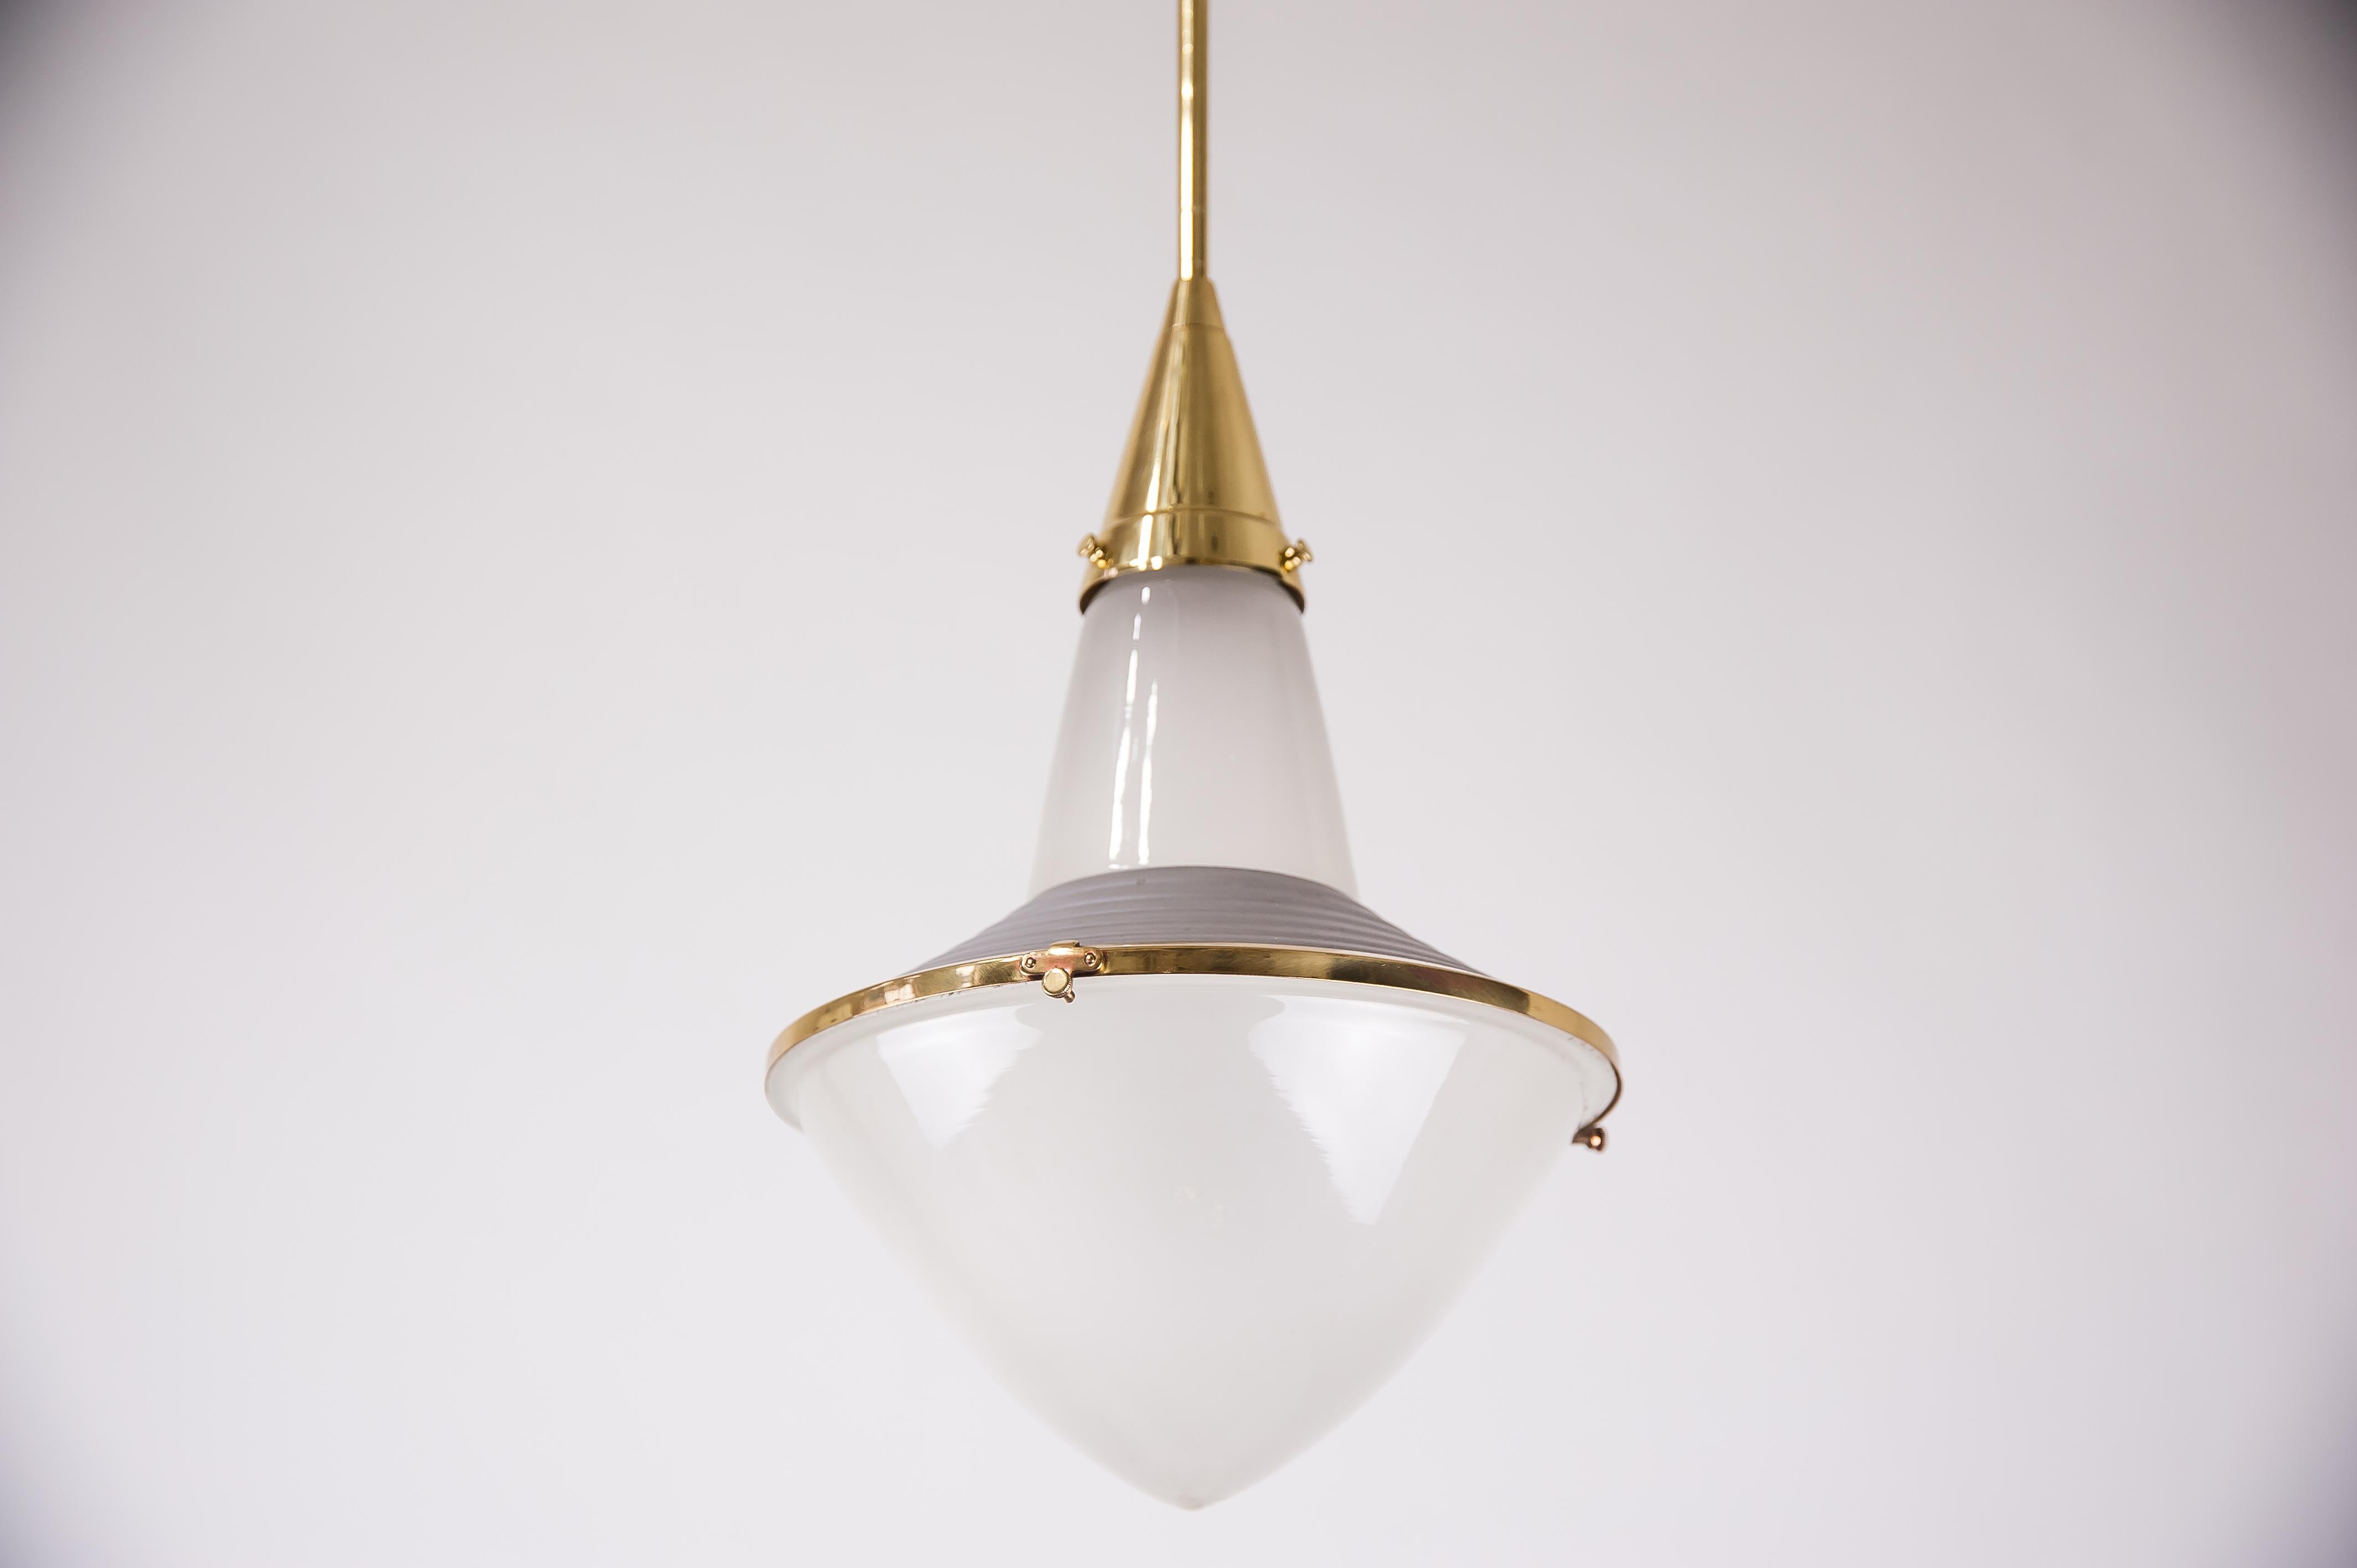 Zeiss Ikon IK 240 Pendel Leuchte Adolf Meyer Bauhaus Design Vintage Lampe 